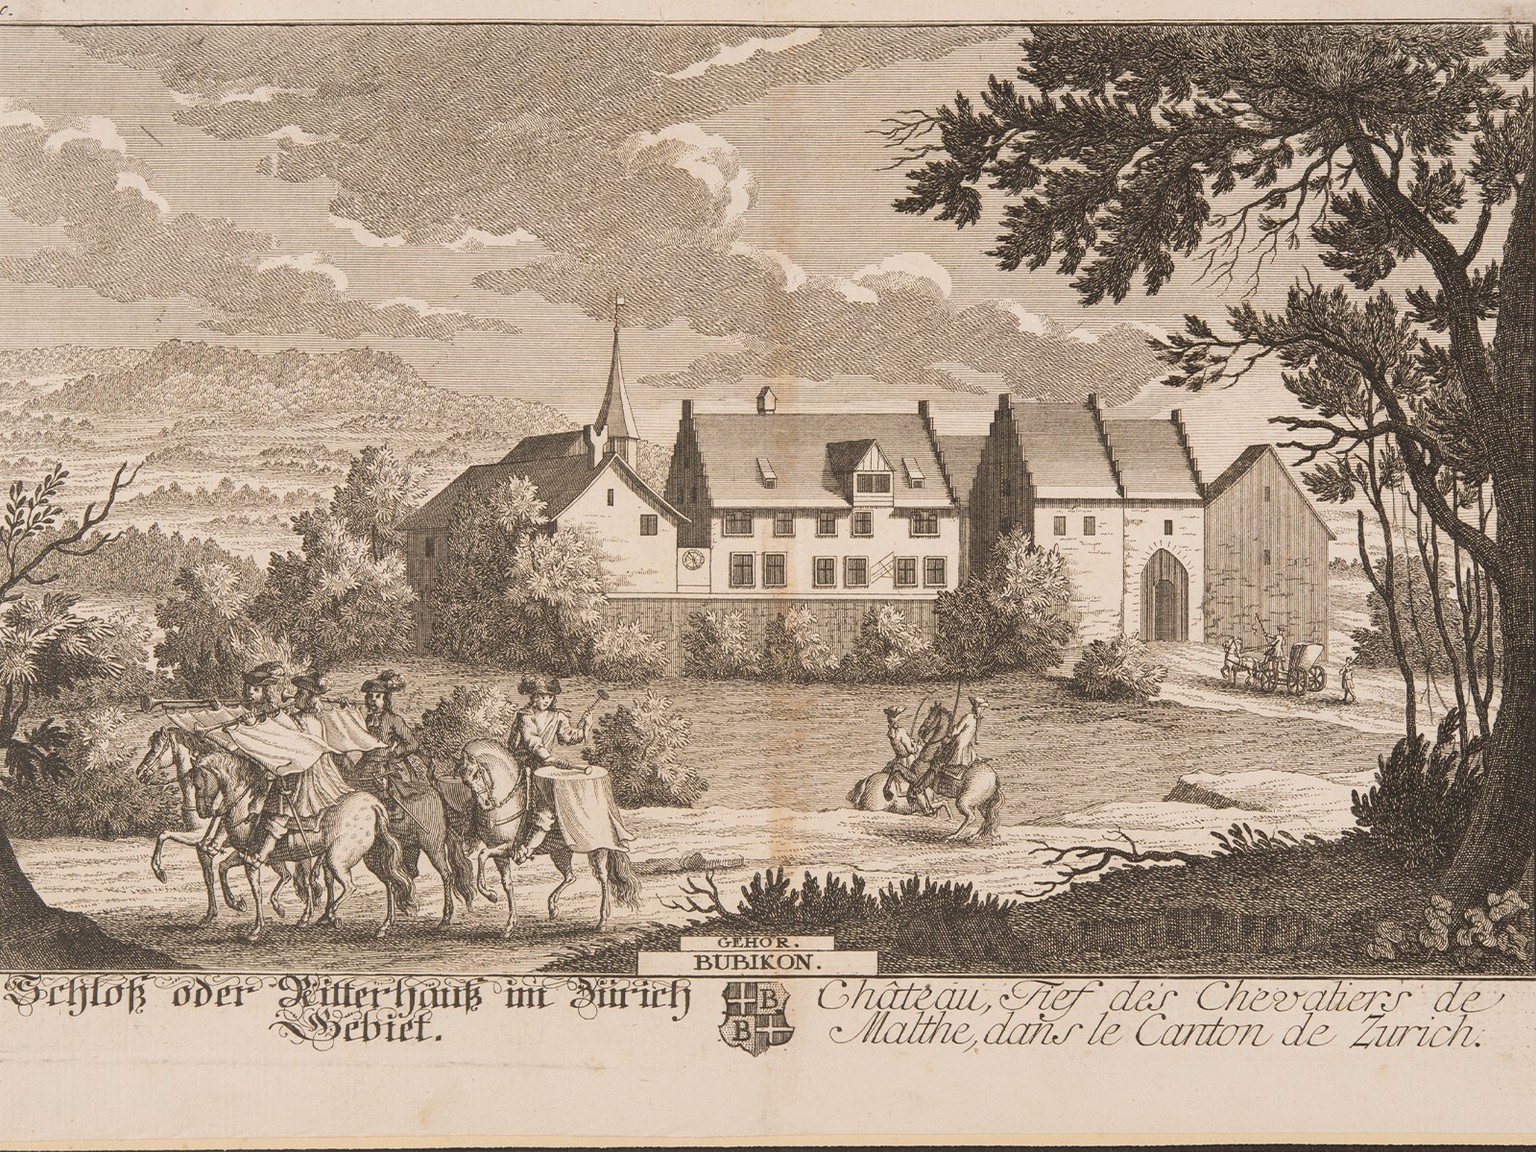 Das Ritterhaus in Bubikon um 1754.
https://permalink.nationalmuseum.ch/100293849